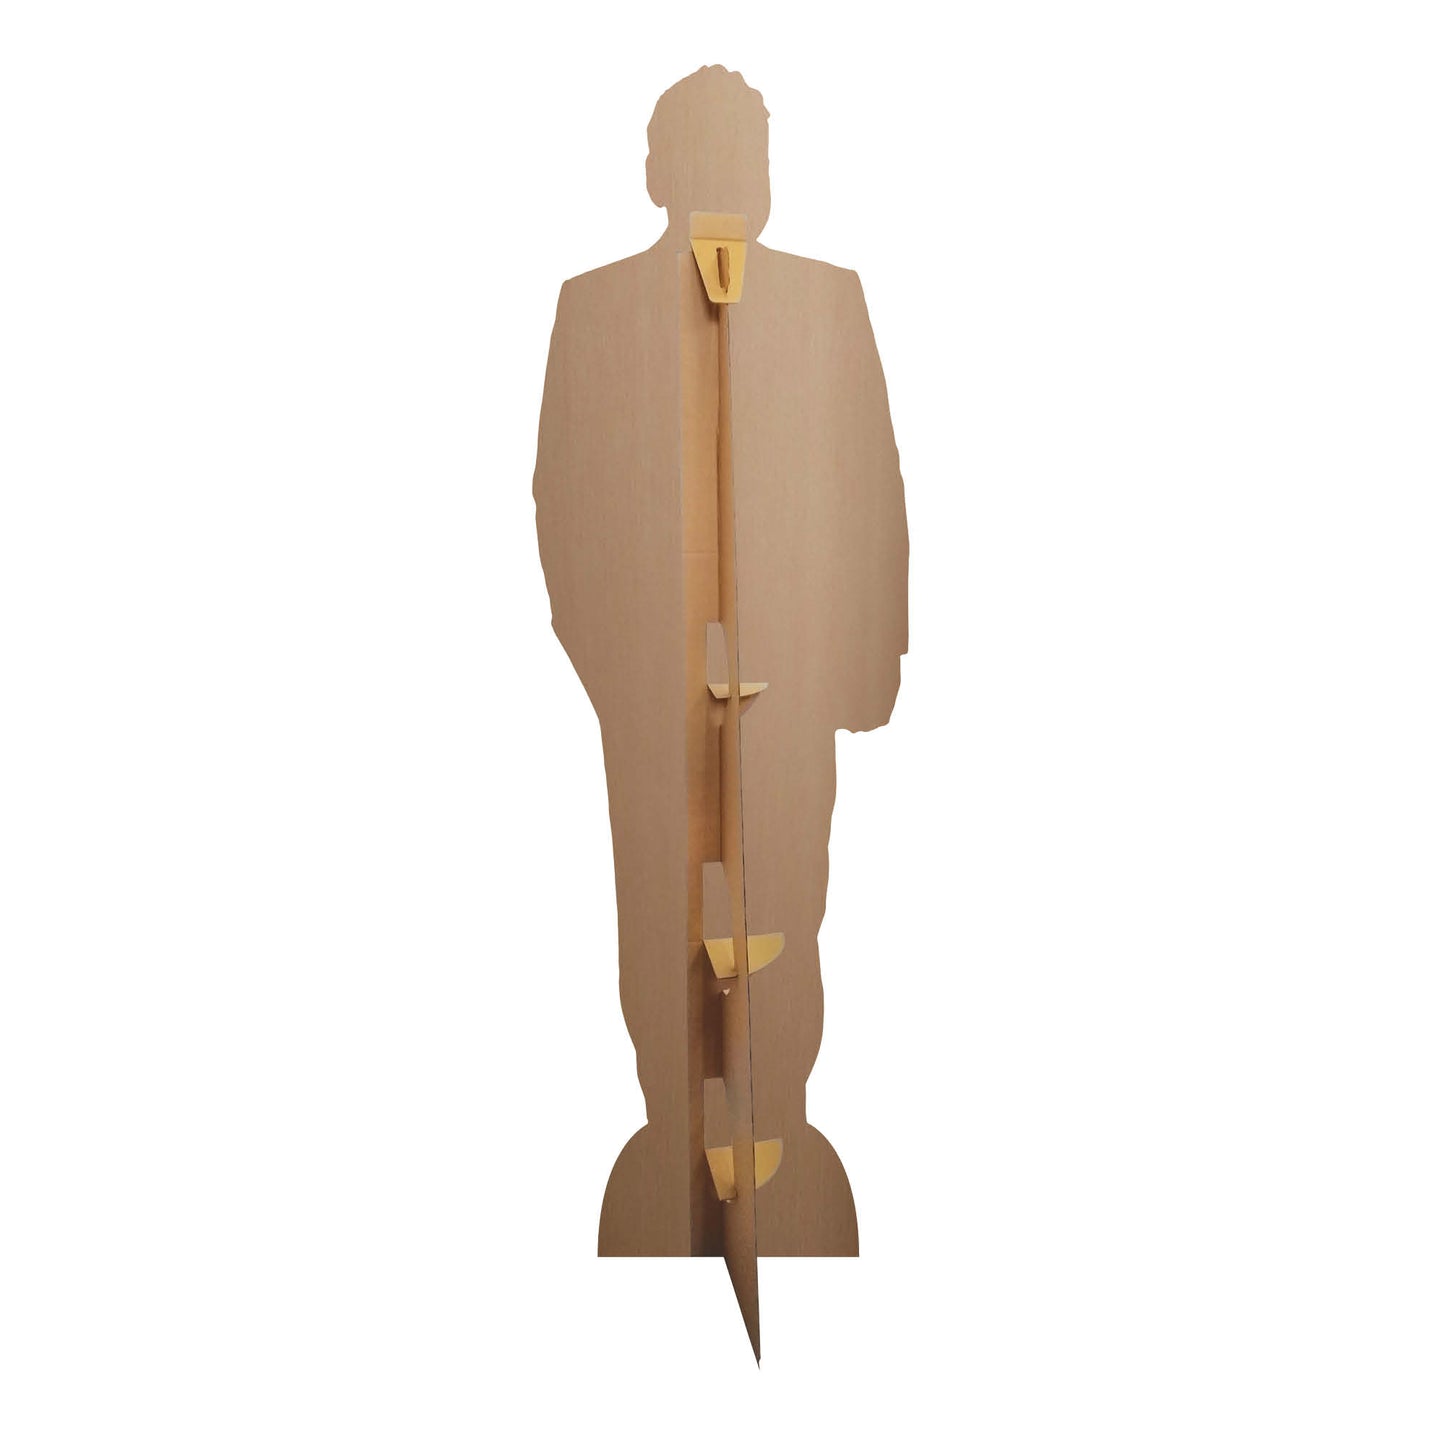 CS977 Kenneth Branagh Height 178cm Lifesize Cardboard Cut Out With Mini